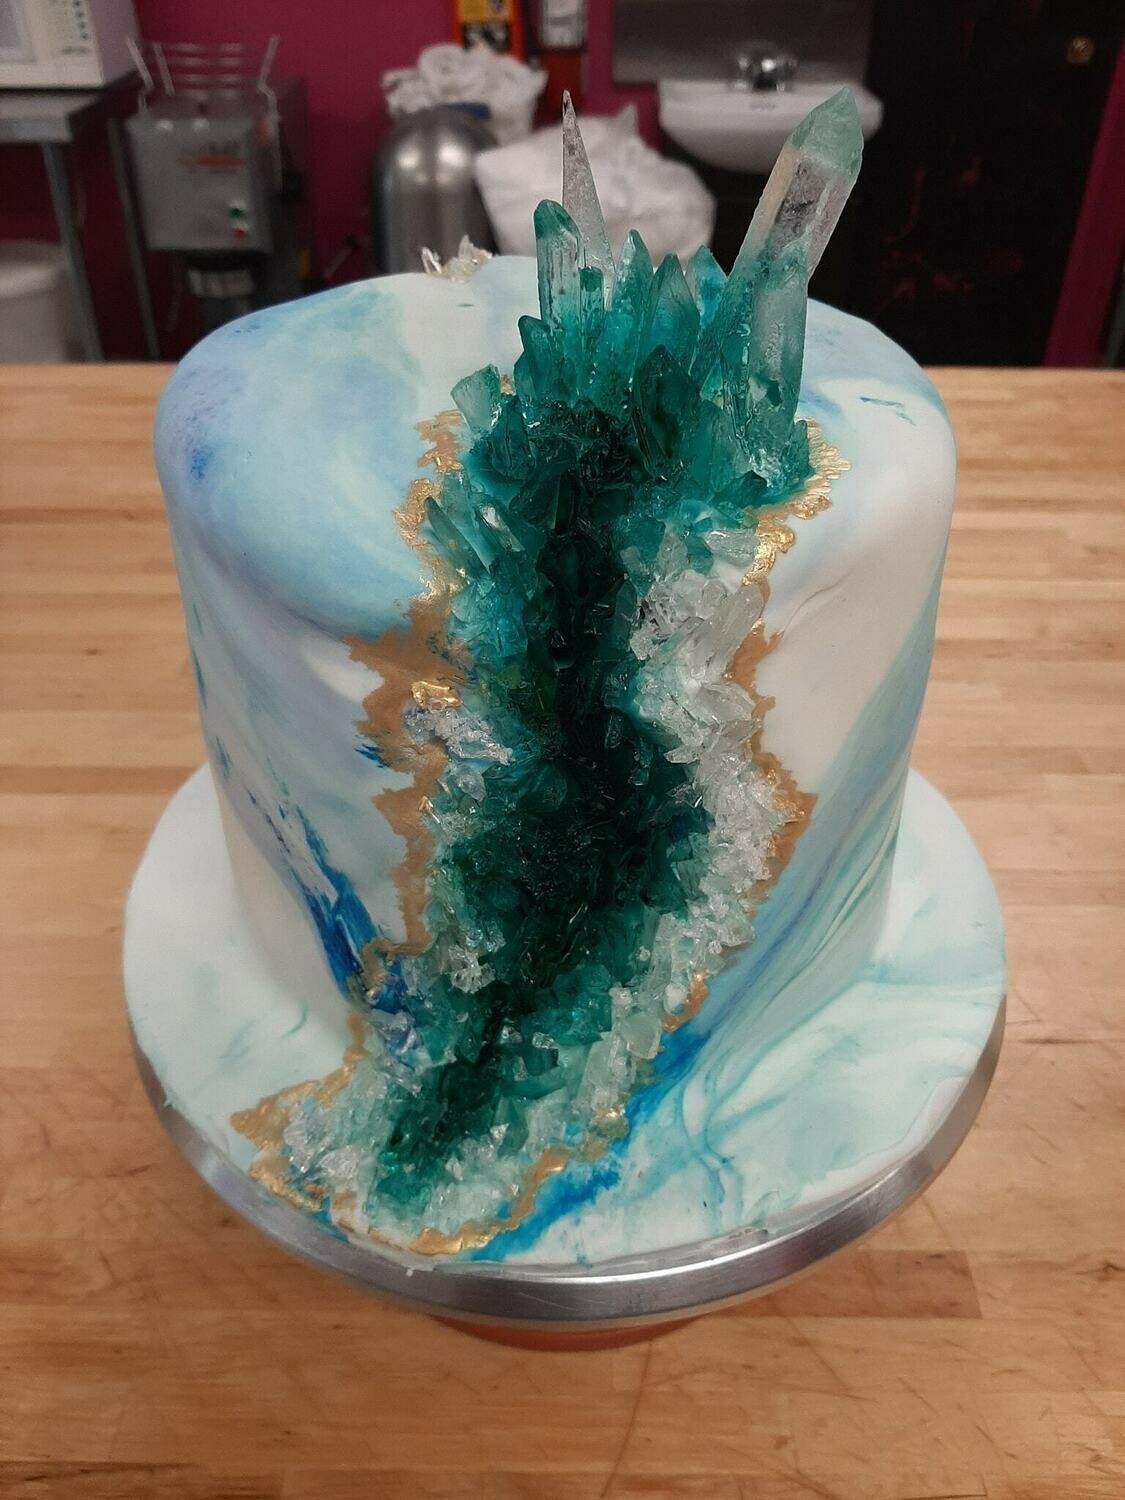 Abigail's birthday cake? (Found on fb) : r/StardewValley